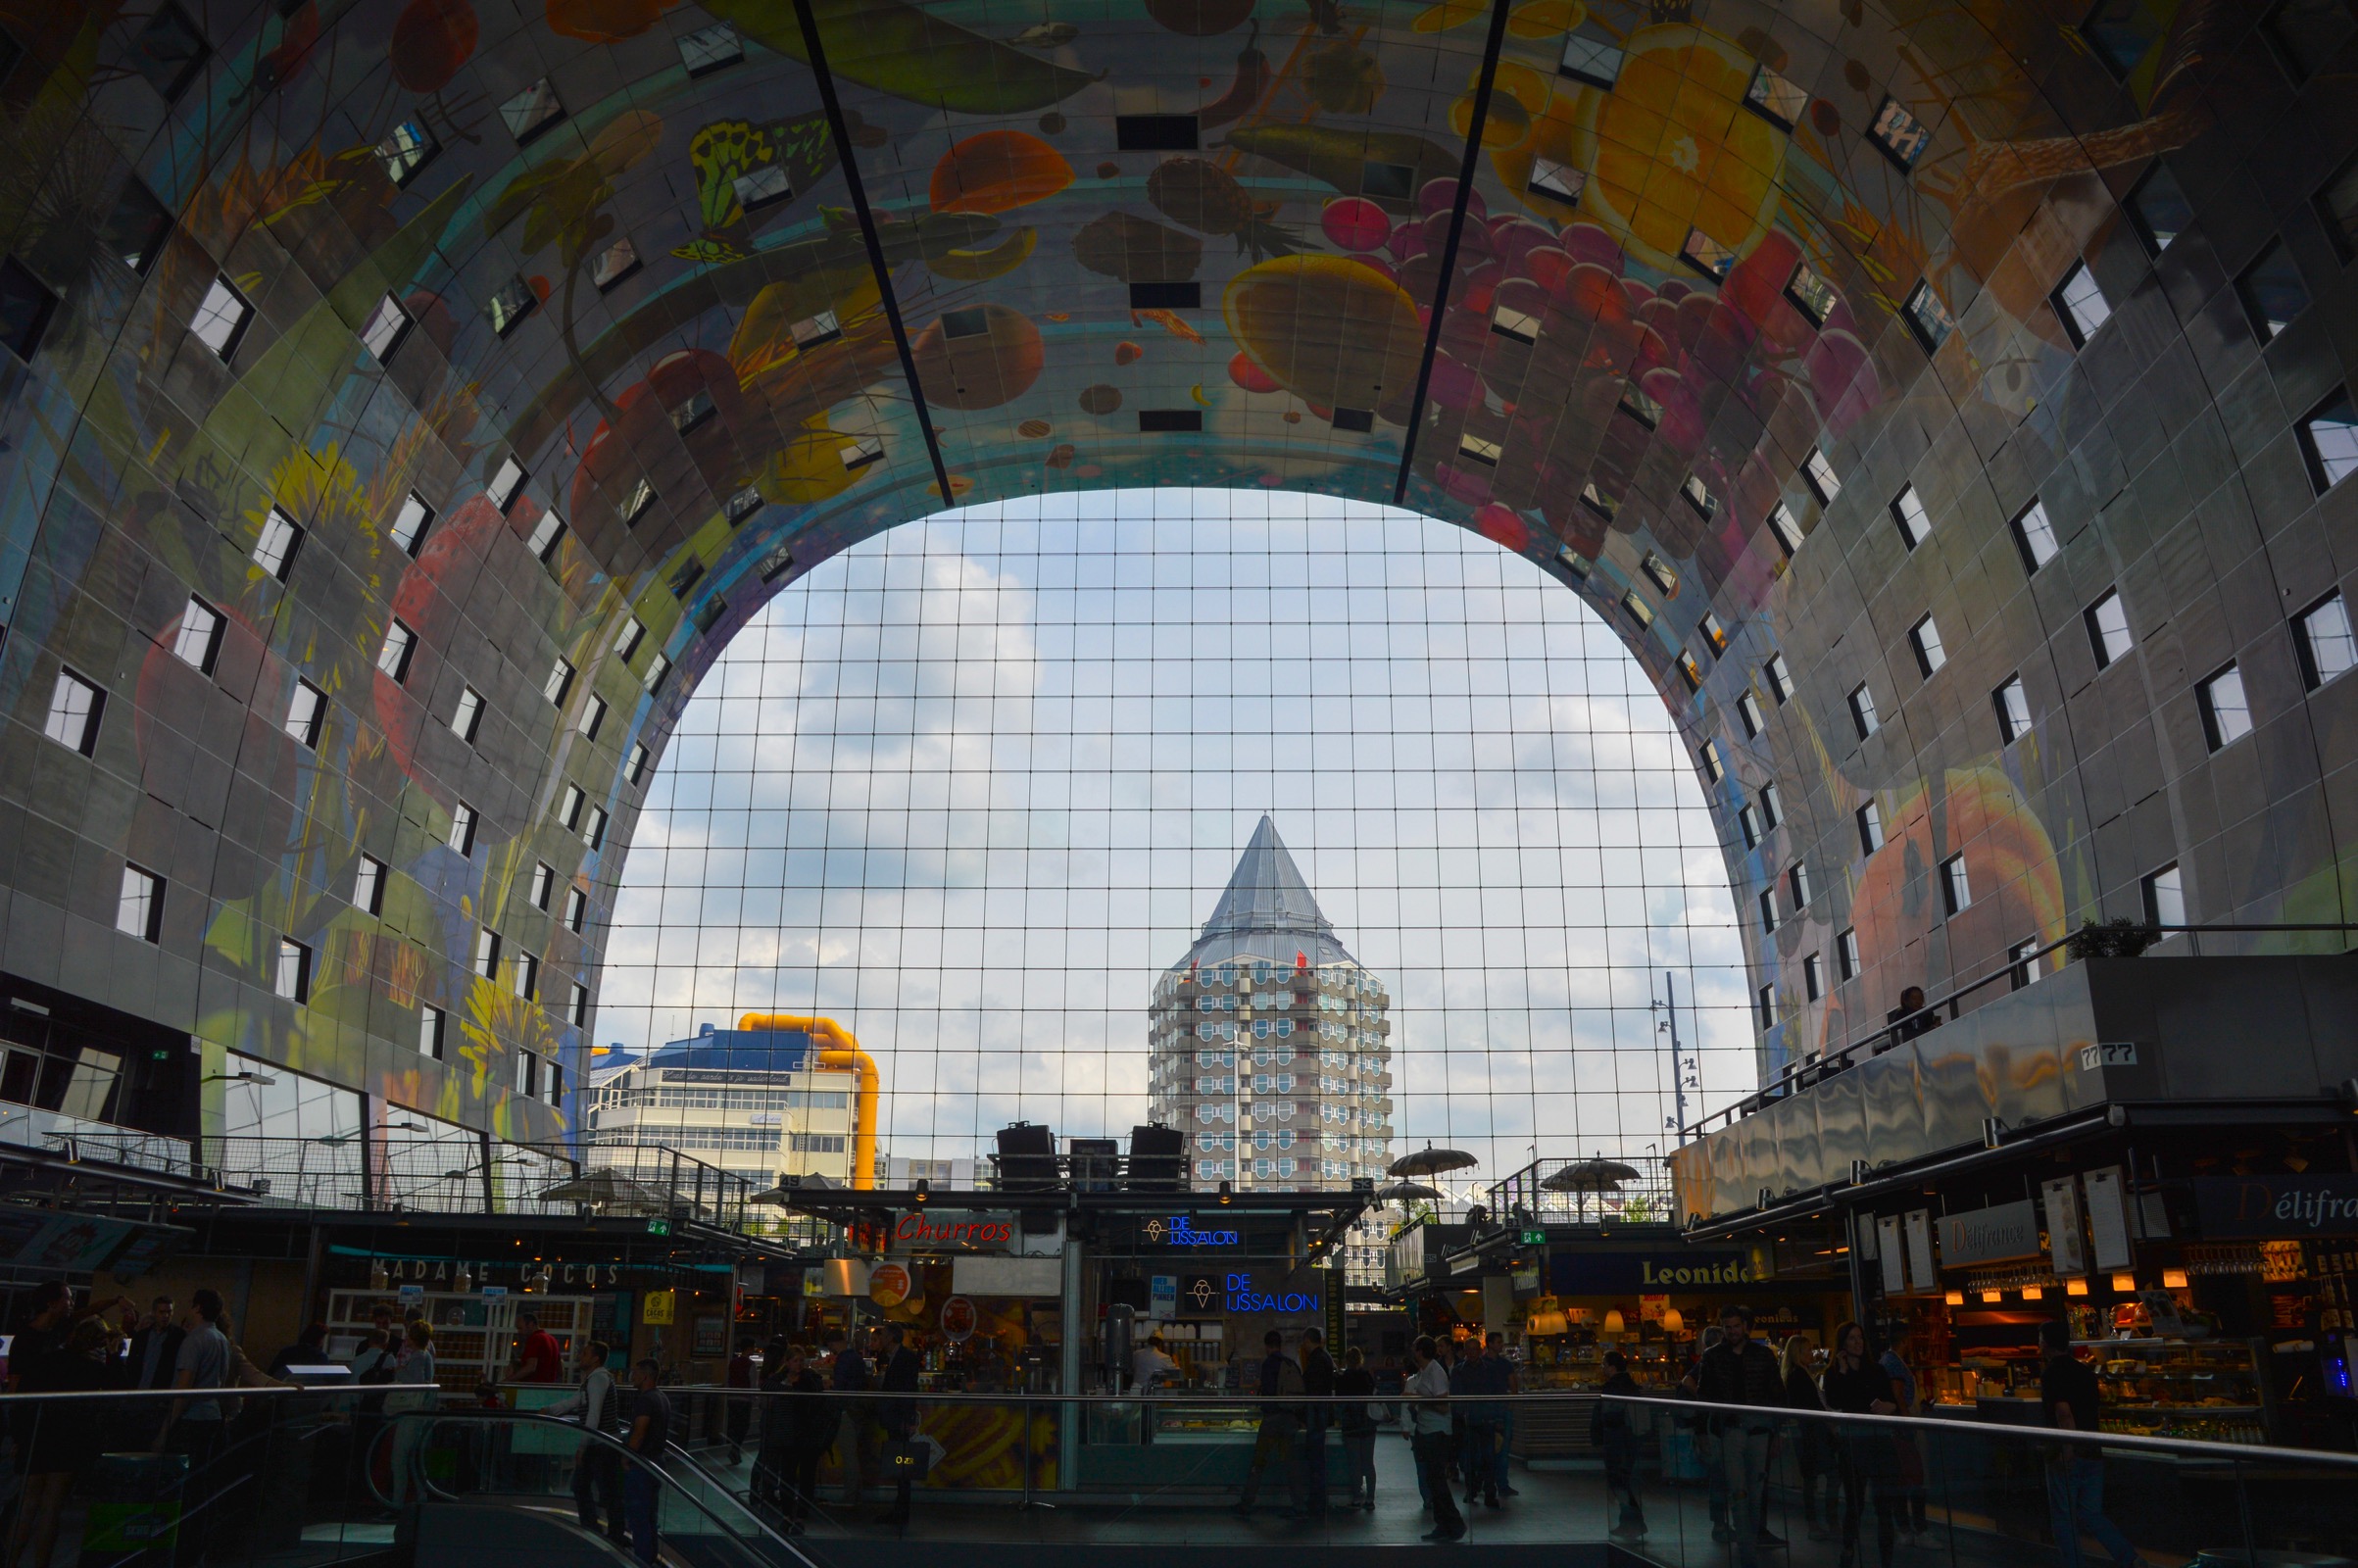 Market Hall, Rotterdam, Netherlands